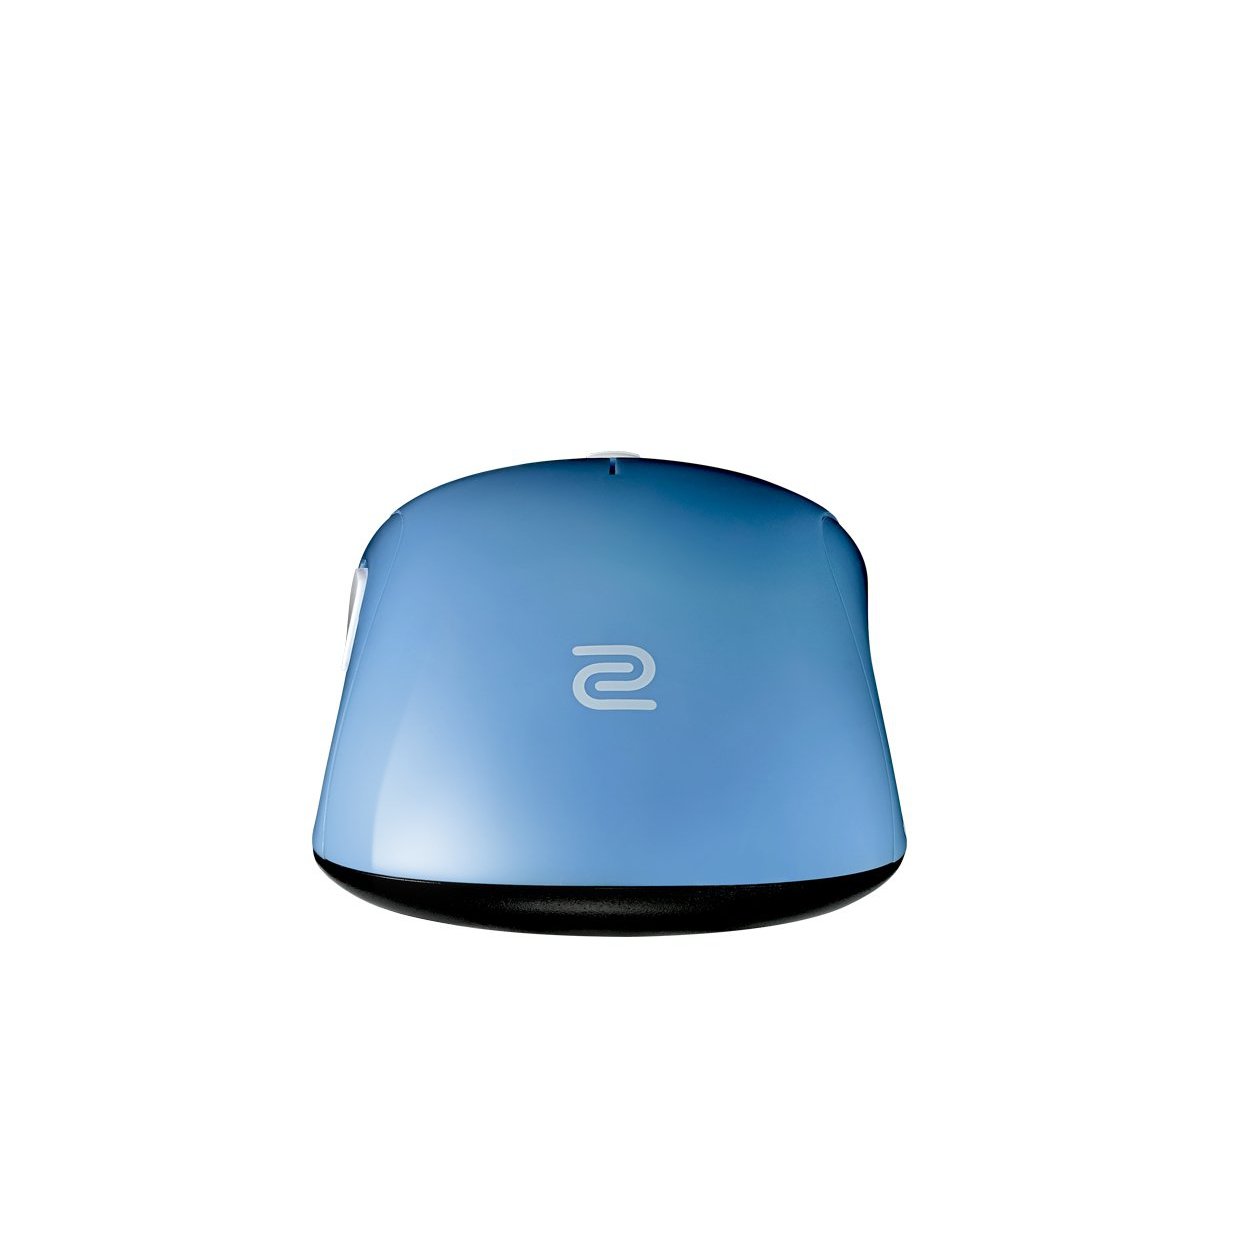 ZOWIE S1 DIVINA BLUE eSports Mouse-Addice Inc